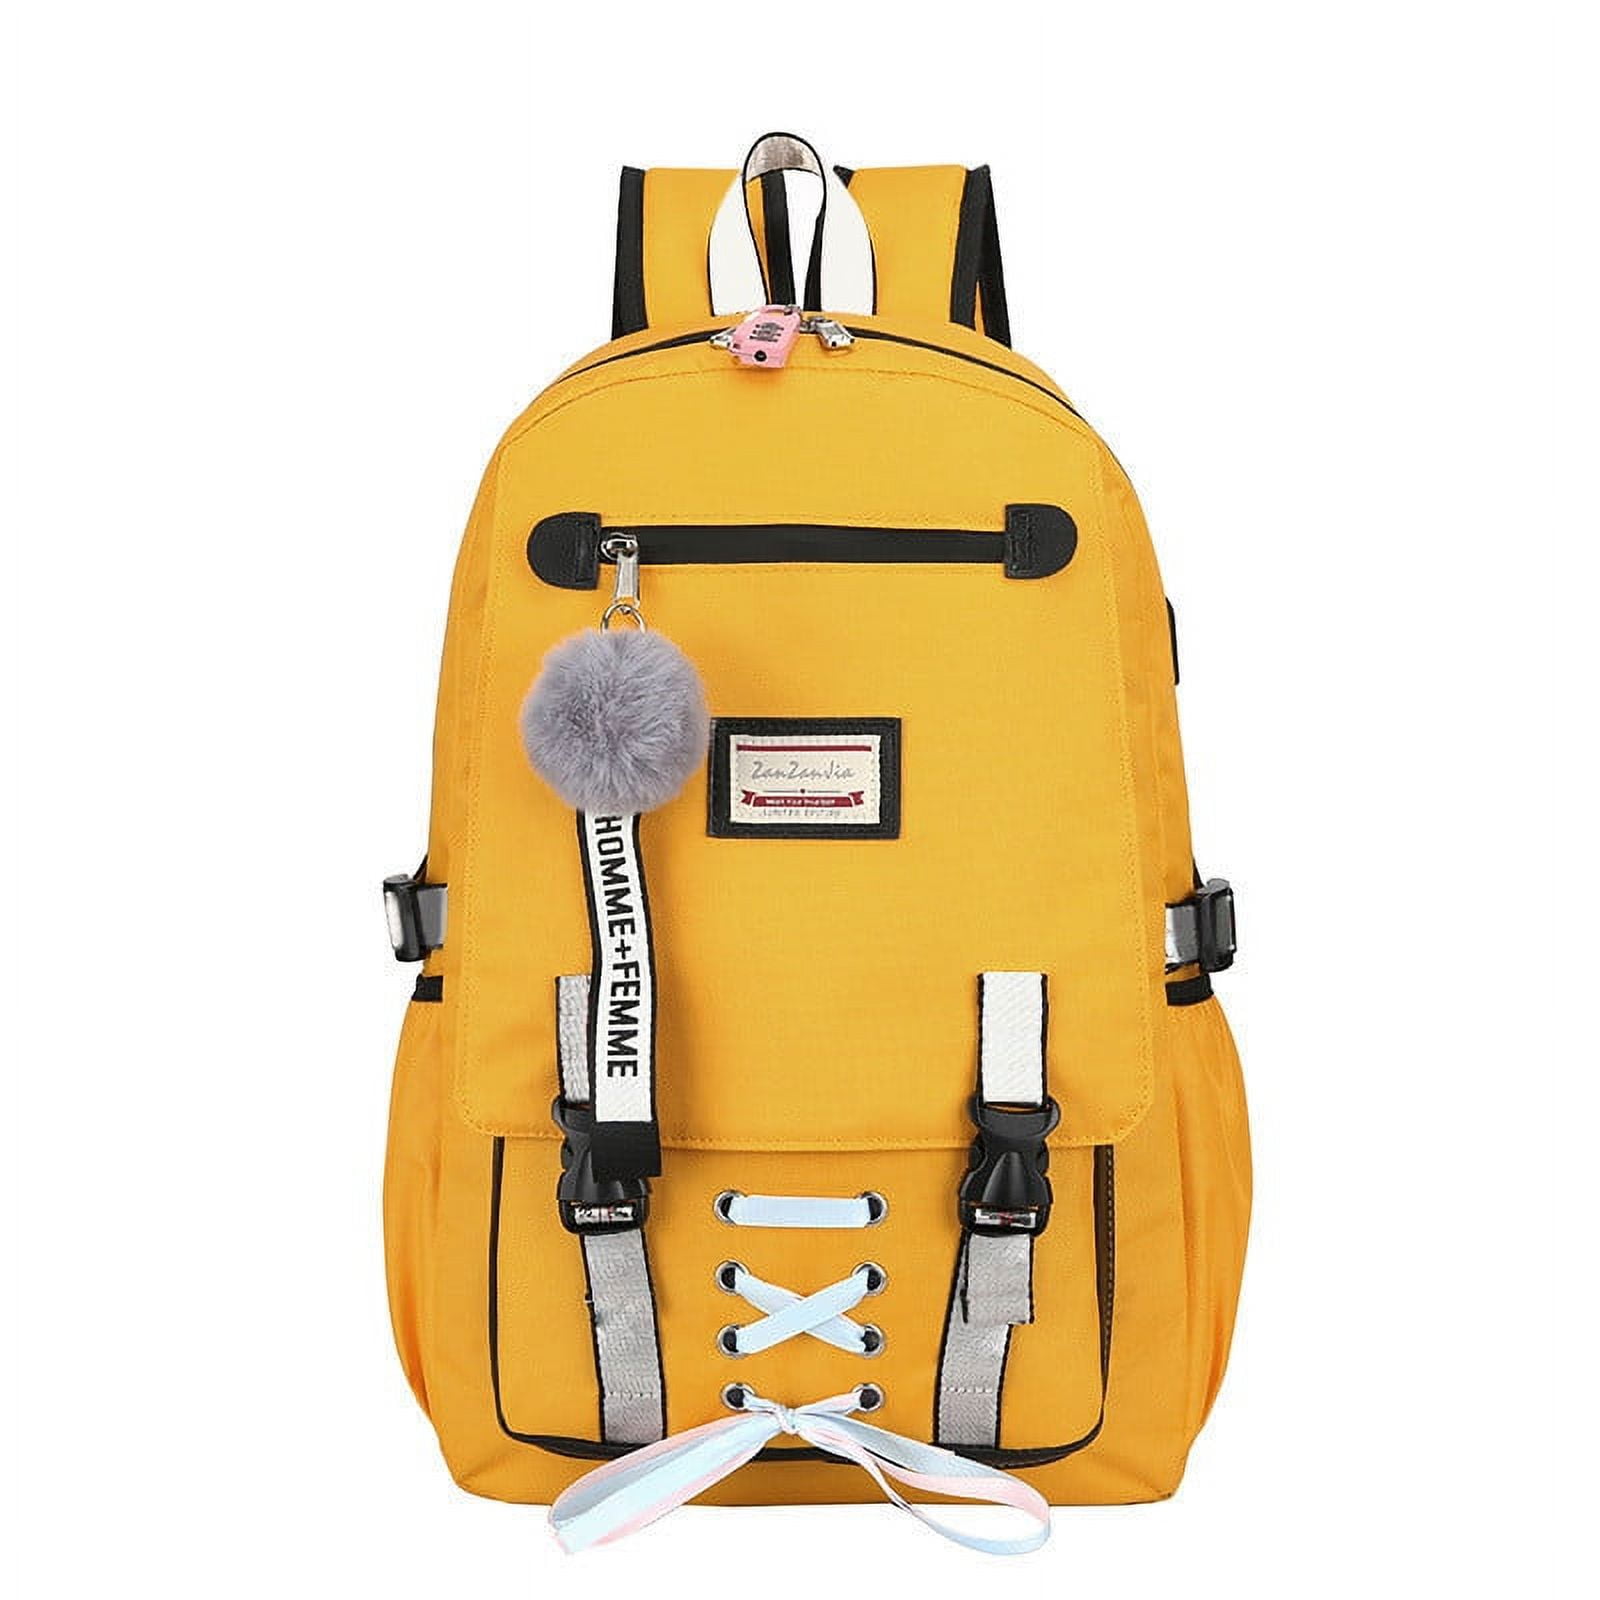 (Yellow) Fashionable School Bags for Teenage Girls Backpack